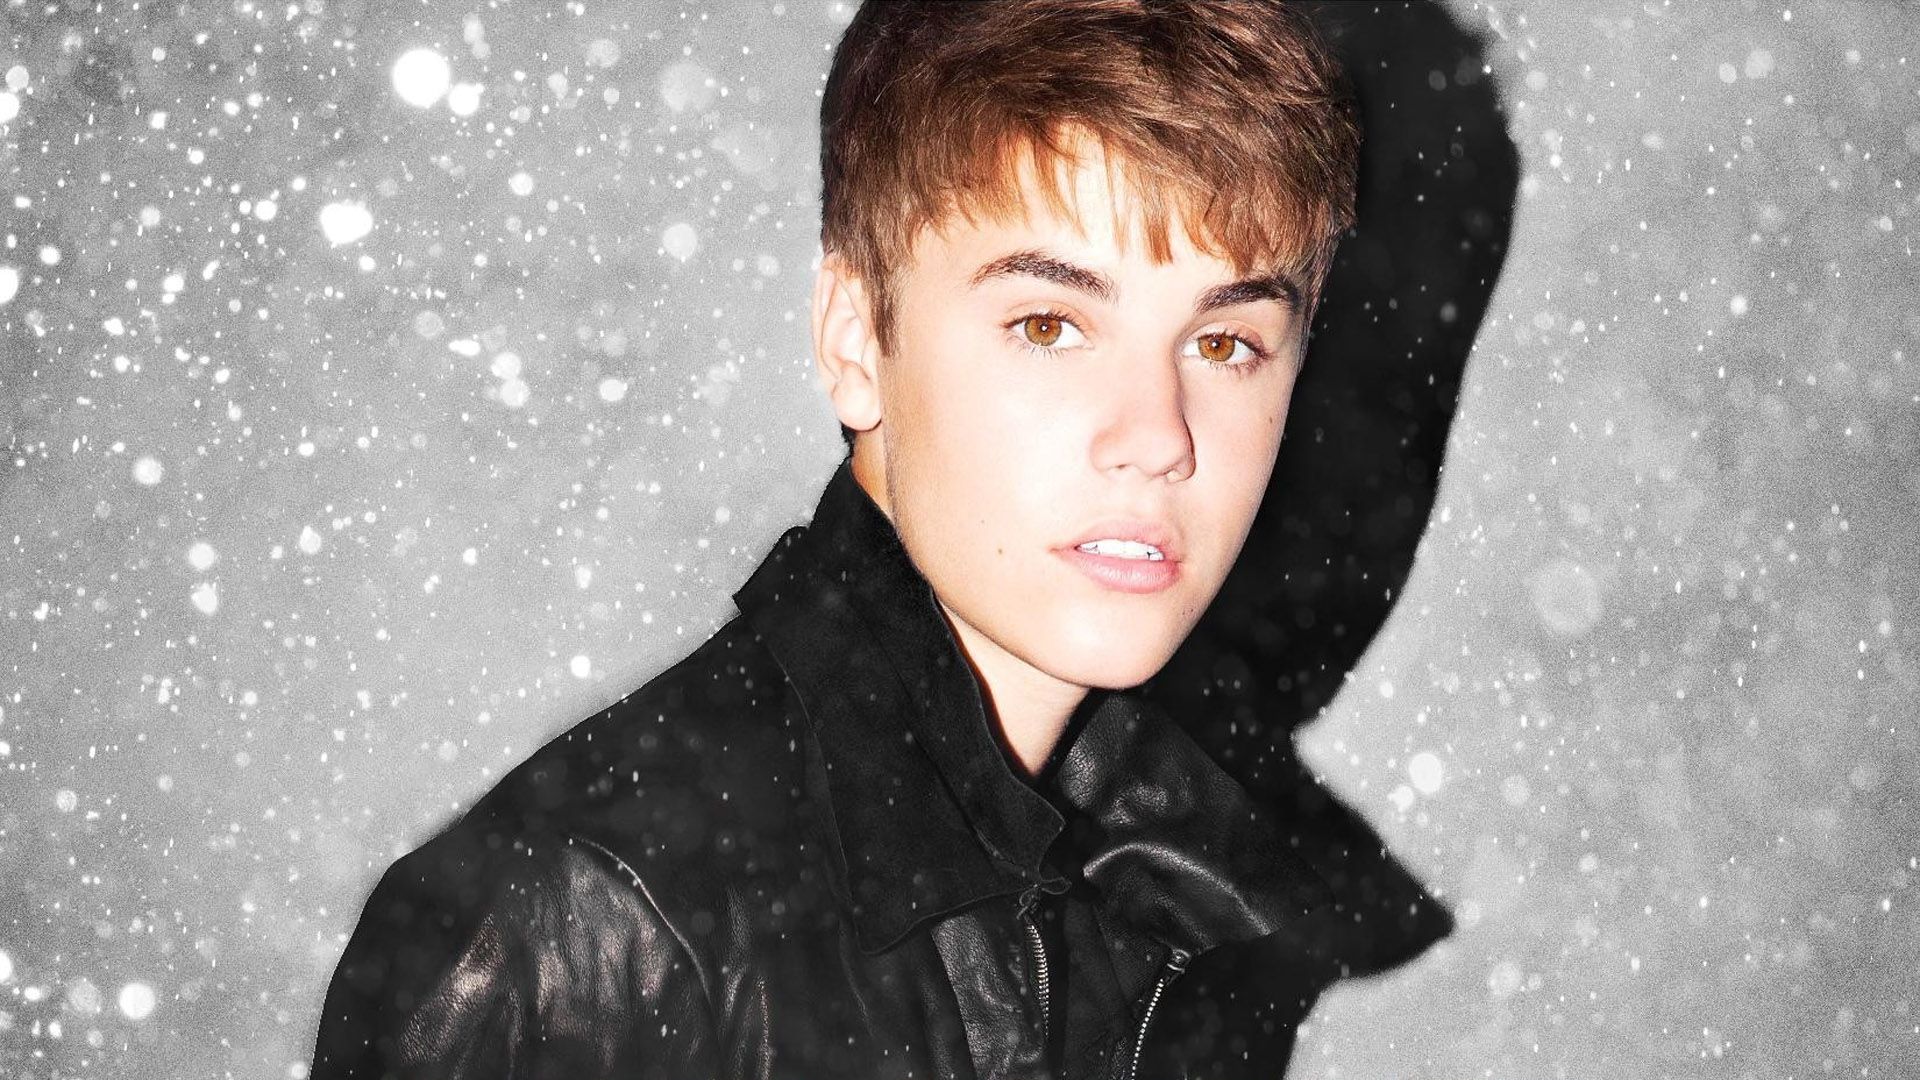 Justin Bieber Wallpapers | Download Free Desktop Wallpaper Images ...